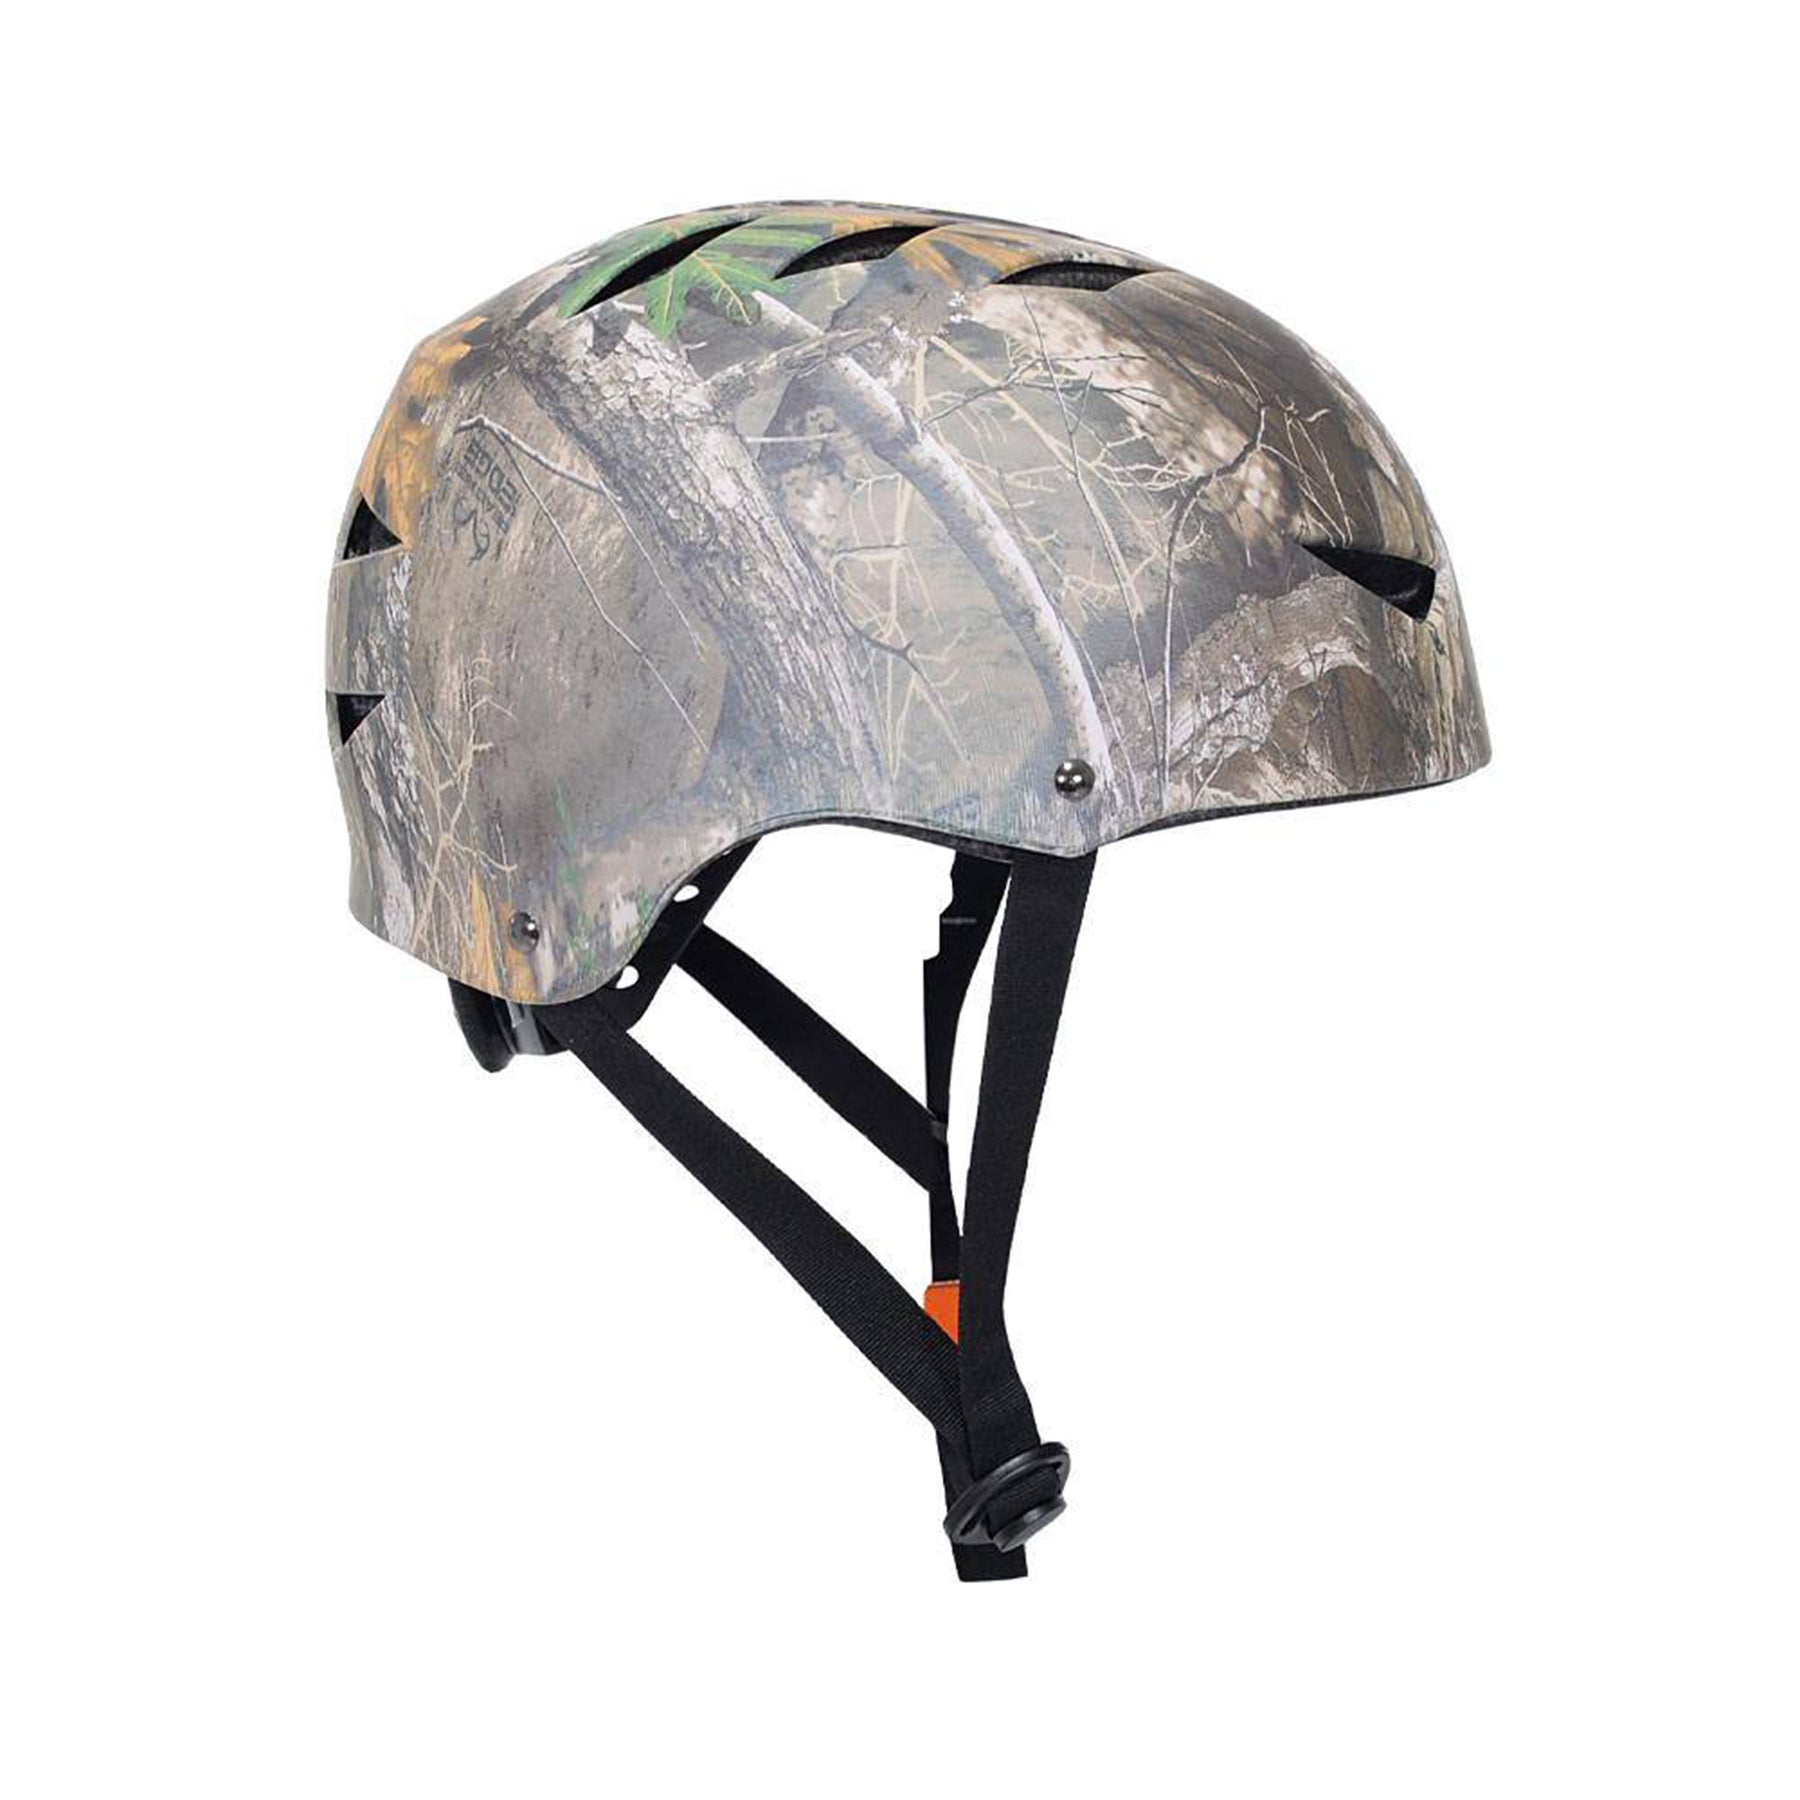 RealTree™ Edge Camo Youth Multi-Sport Helmet | Helmet for Kids Ages 8+